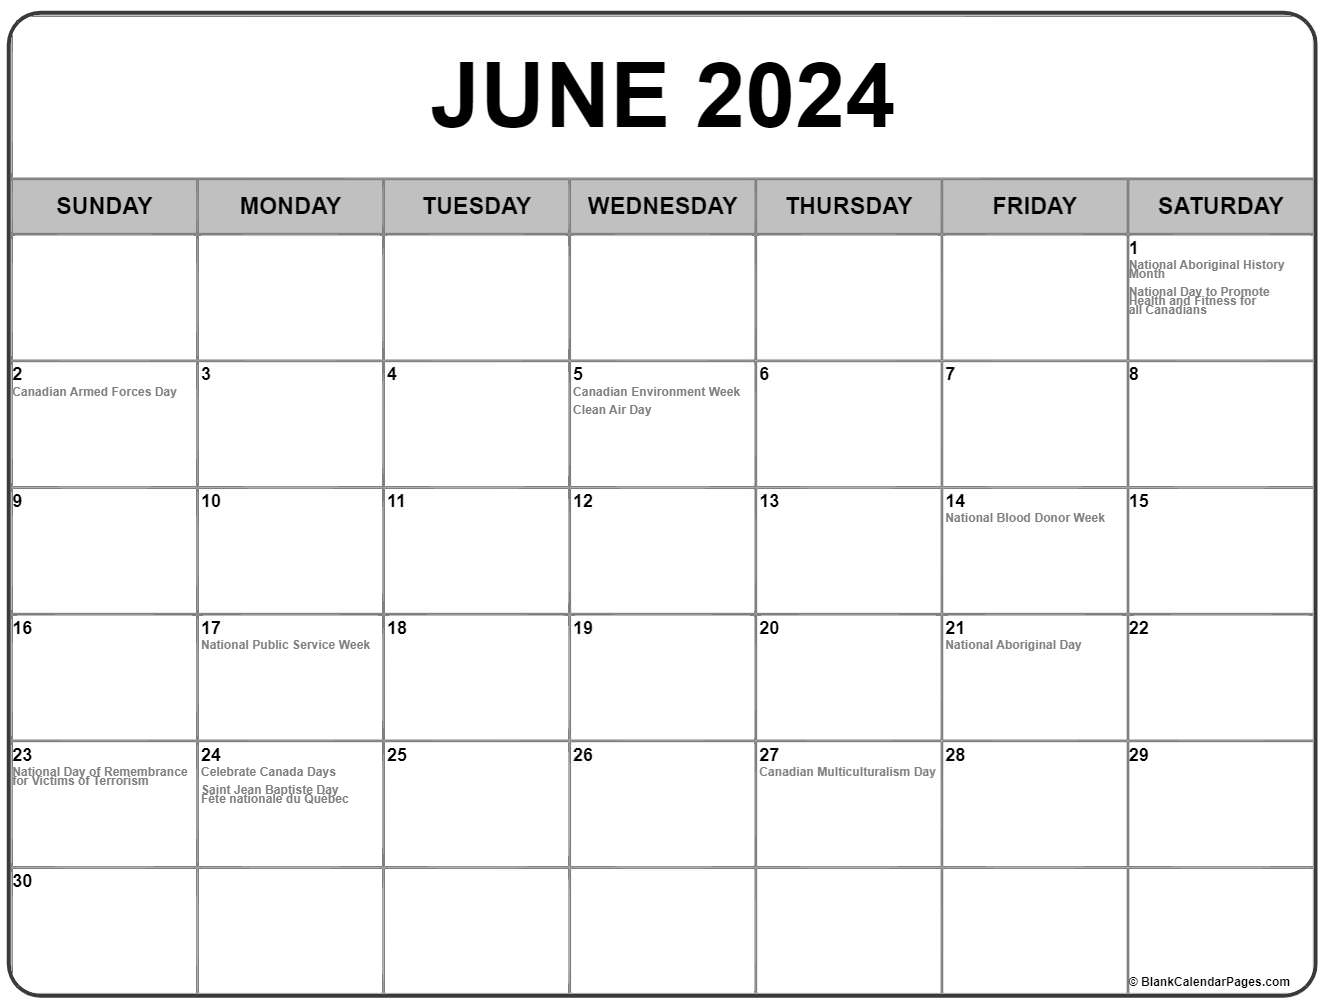 canada-calendar-2023-free-printable-pdf-templates-2022-calendar